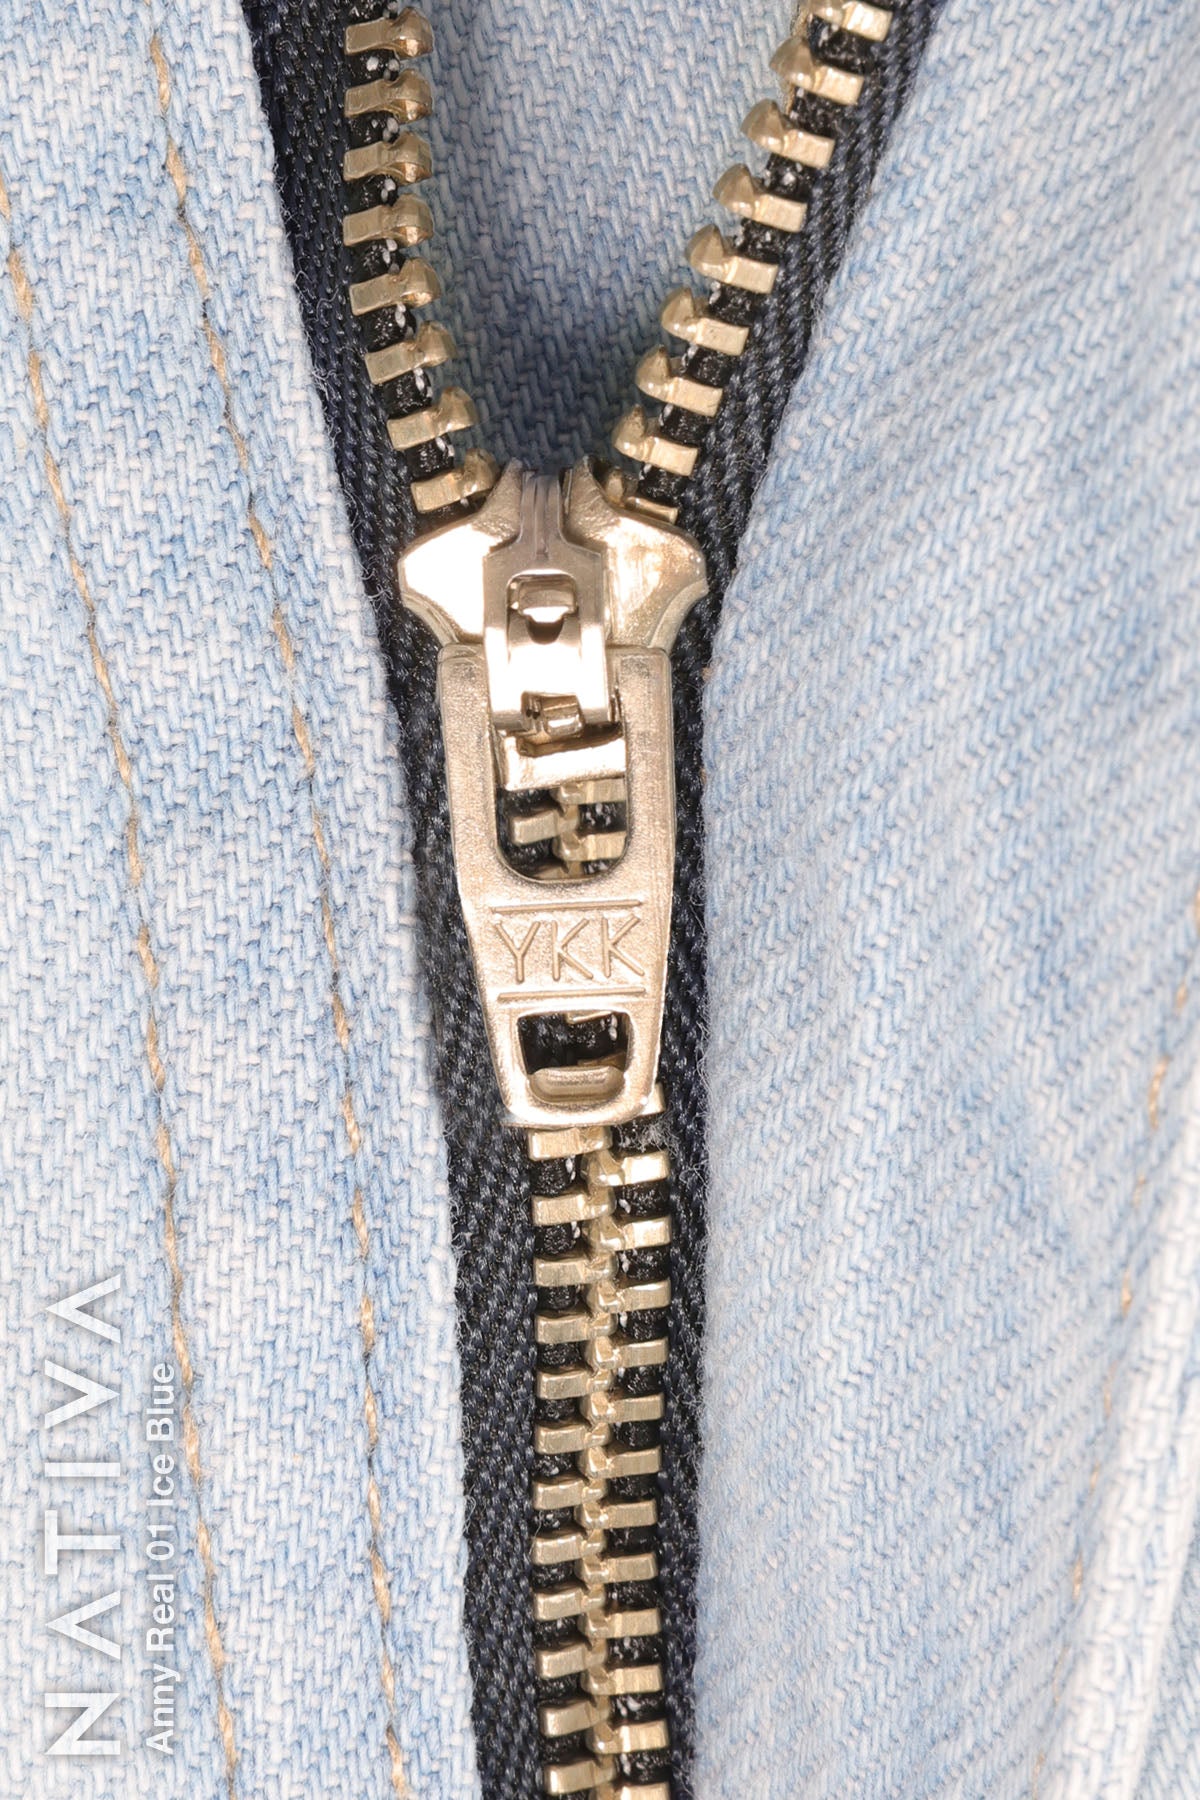 WIDE LEG True Denim Jeans, ANNY REAL 01 ICE BLUE. Talle Alto. Auténtico e Interminable. Cintura Ajustable PERFECT FIT®